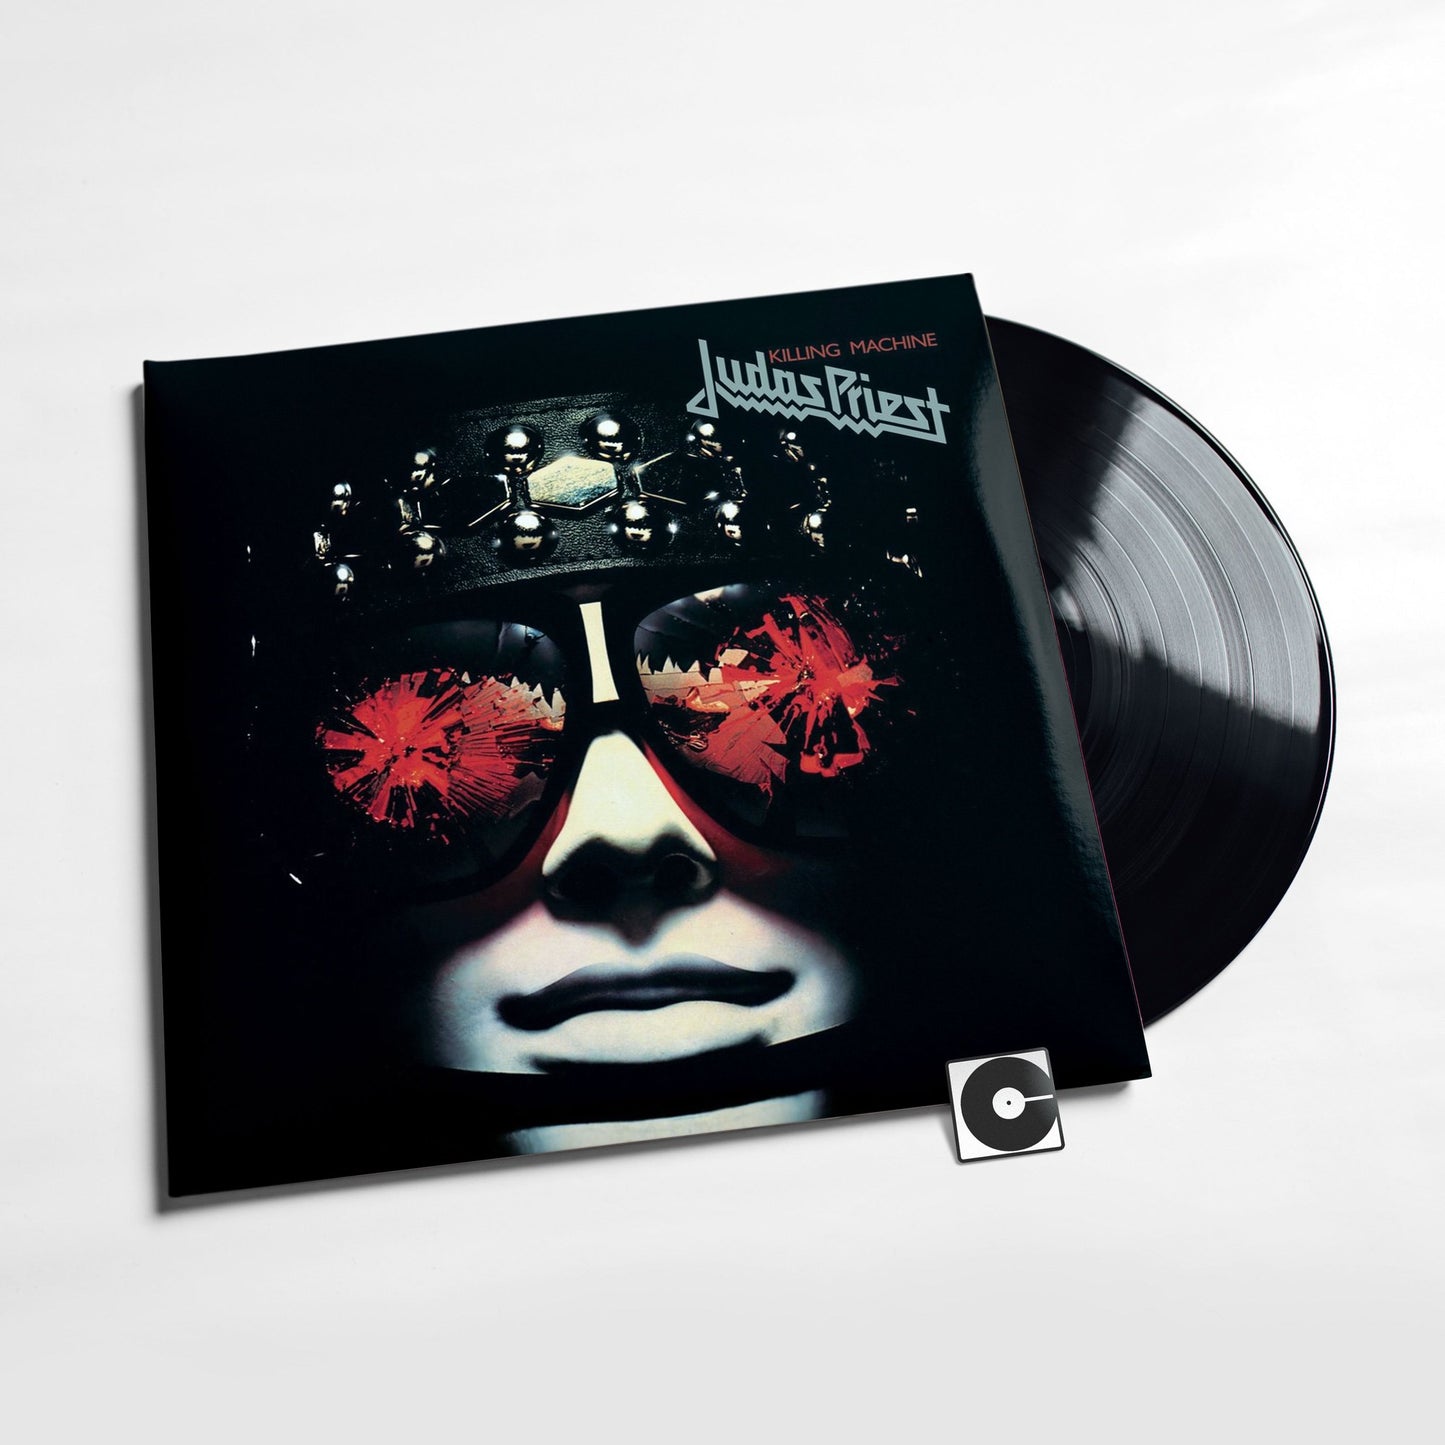 Judas Priest - "Killing Machine"